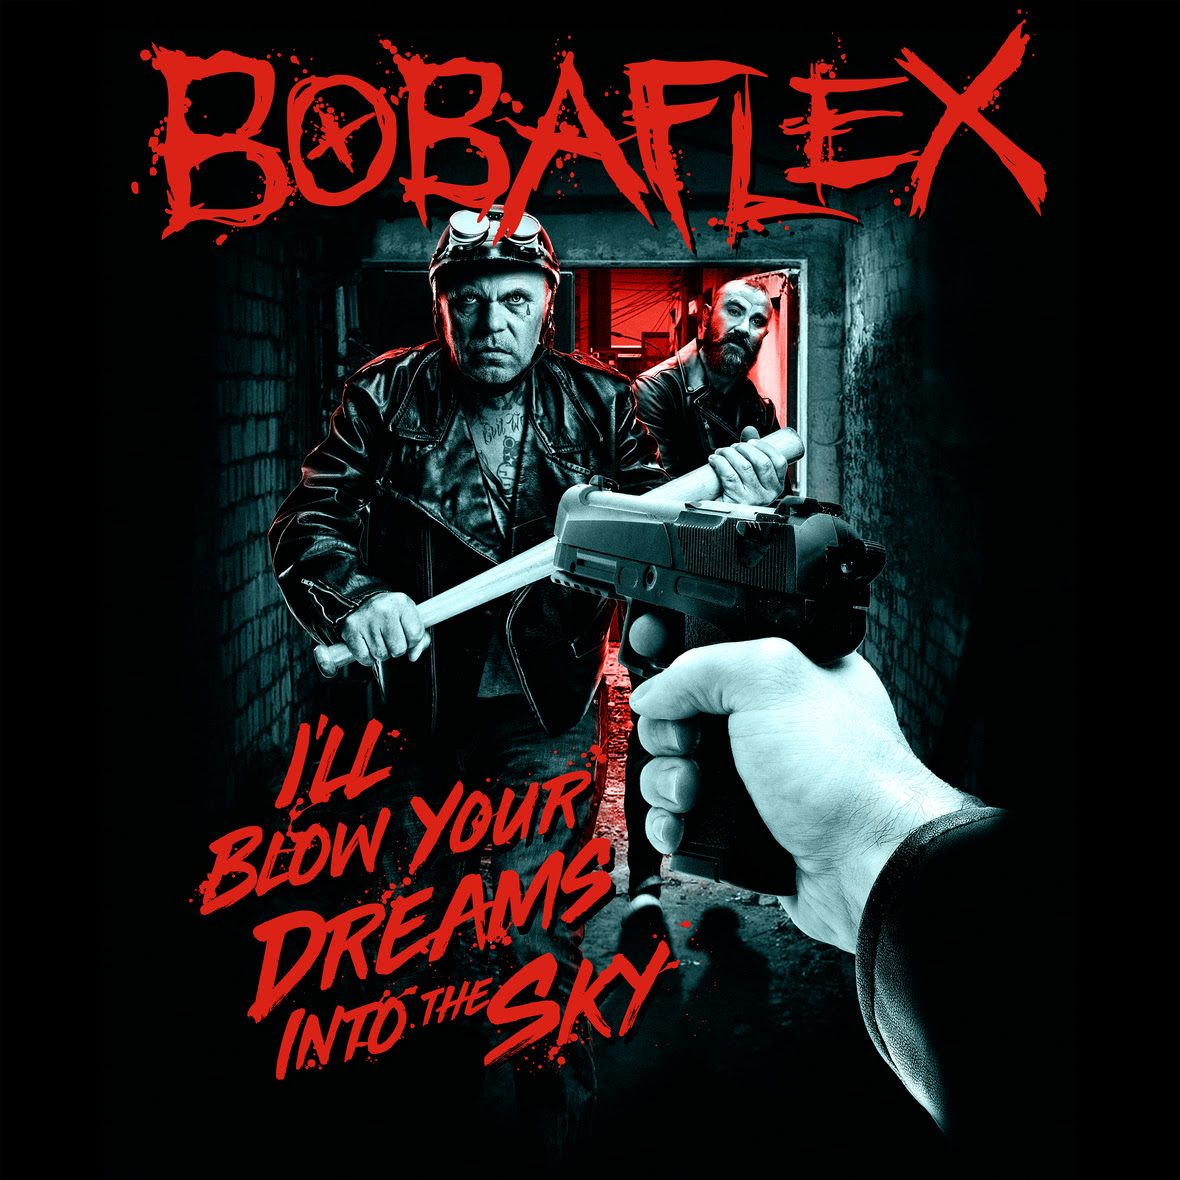 Bobaflex Dreams edit 3